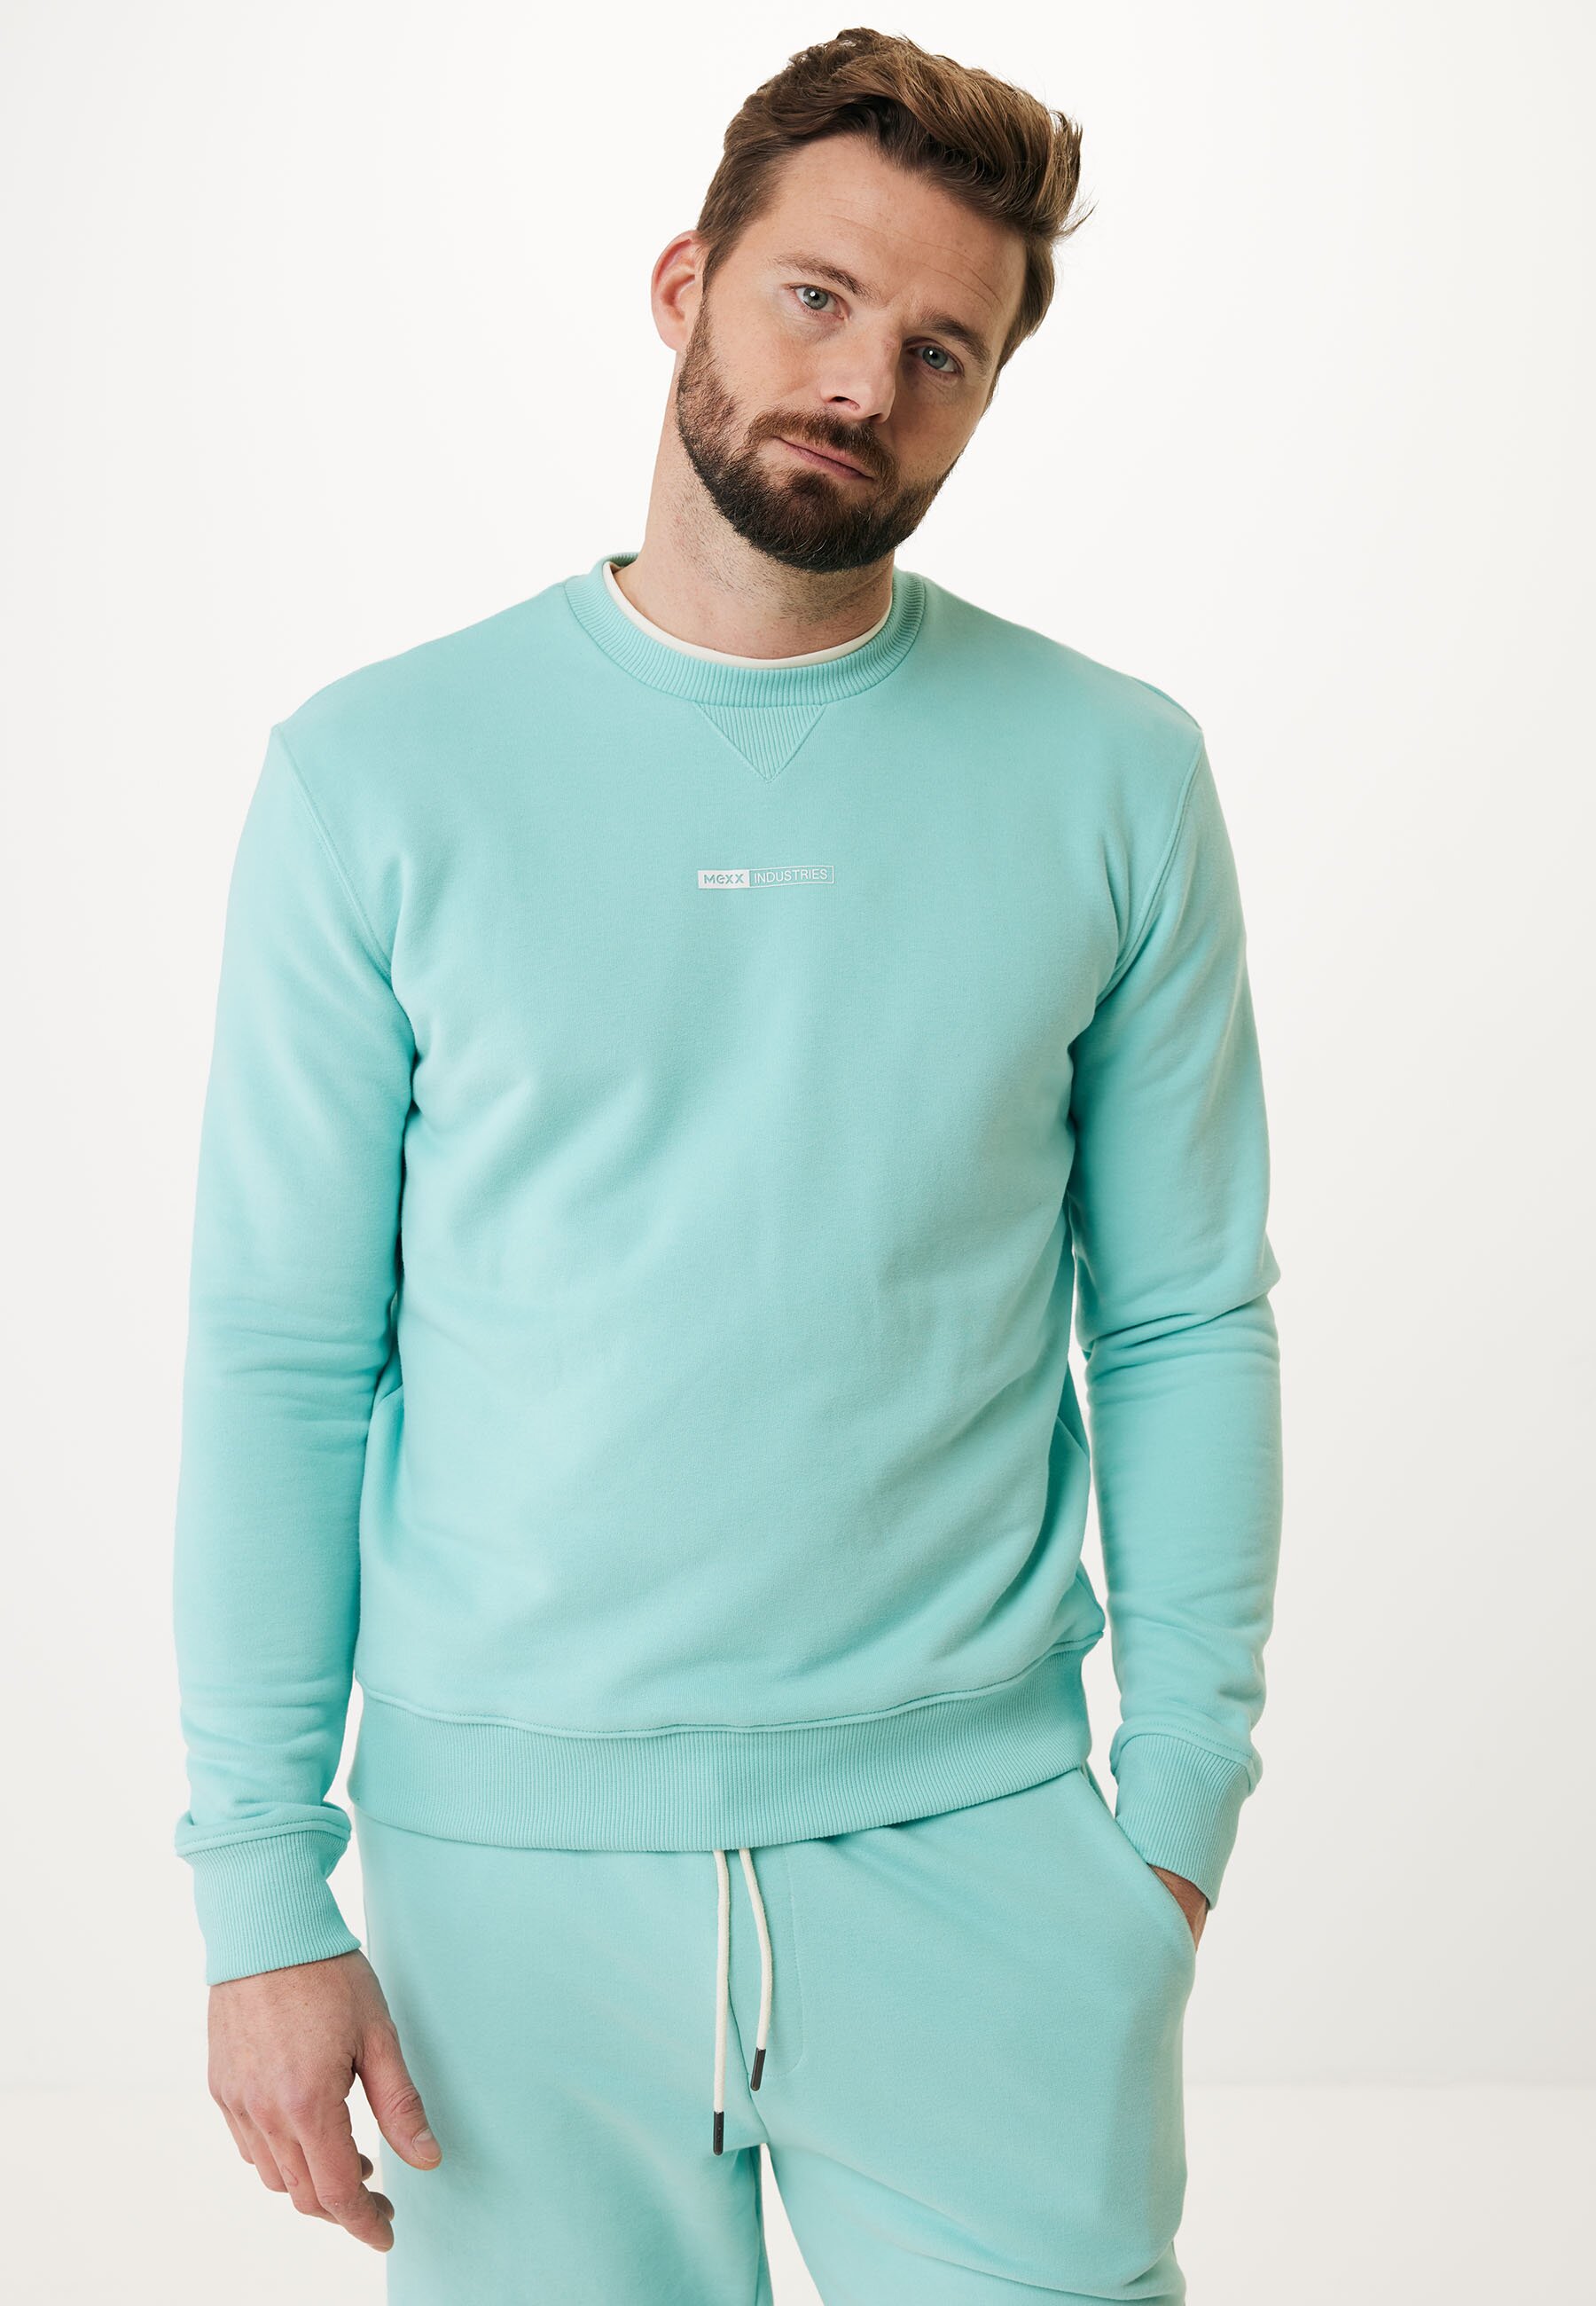 Mexx Crew Neck Sweater With Small Chest Print Mannen - Aqua Blauw - Maat S